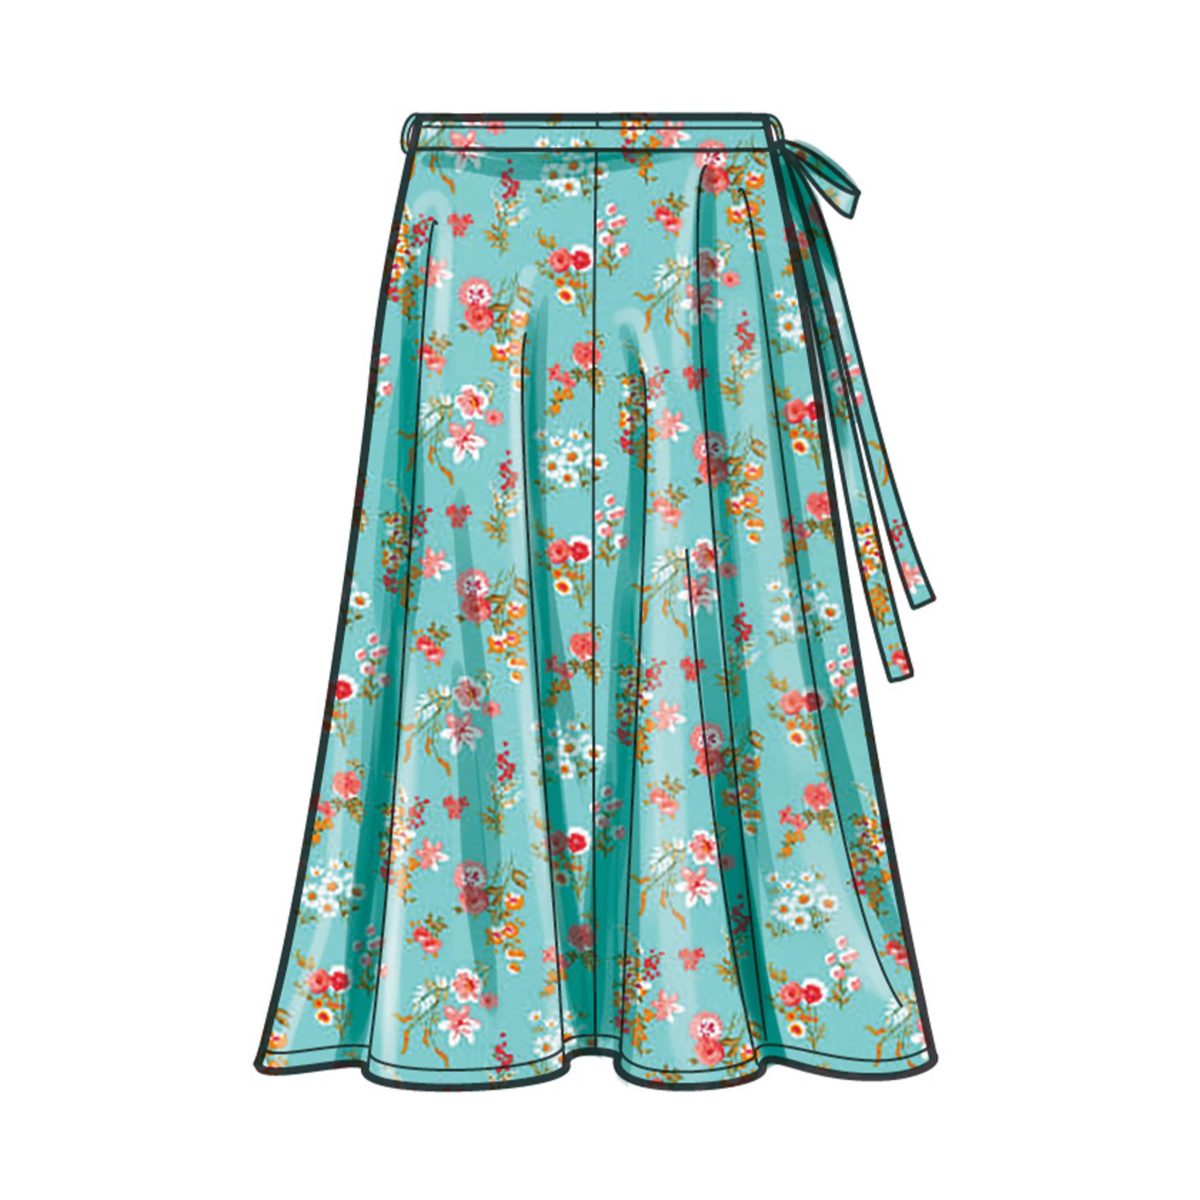 New Look Sewing Pattern N6721 Misses' Skirts